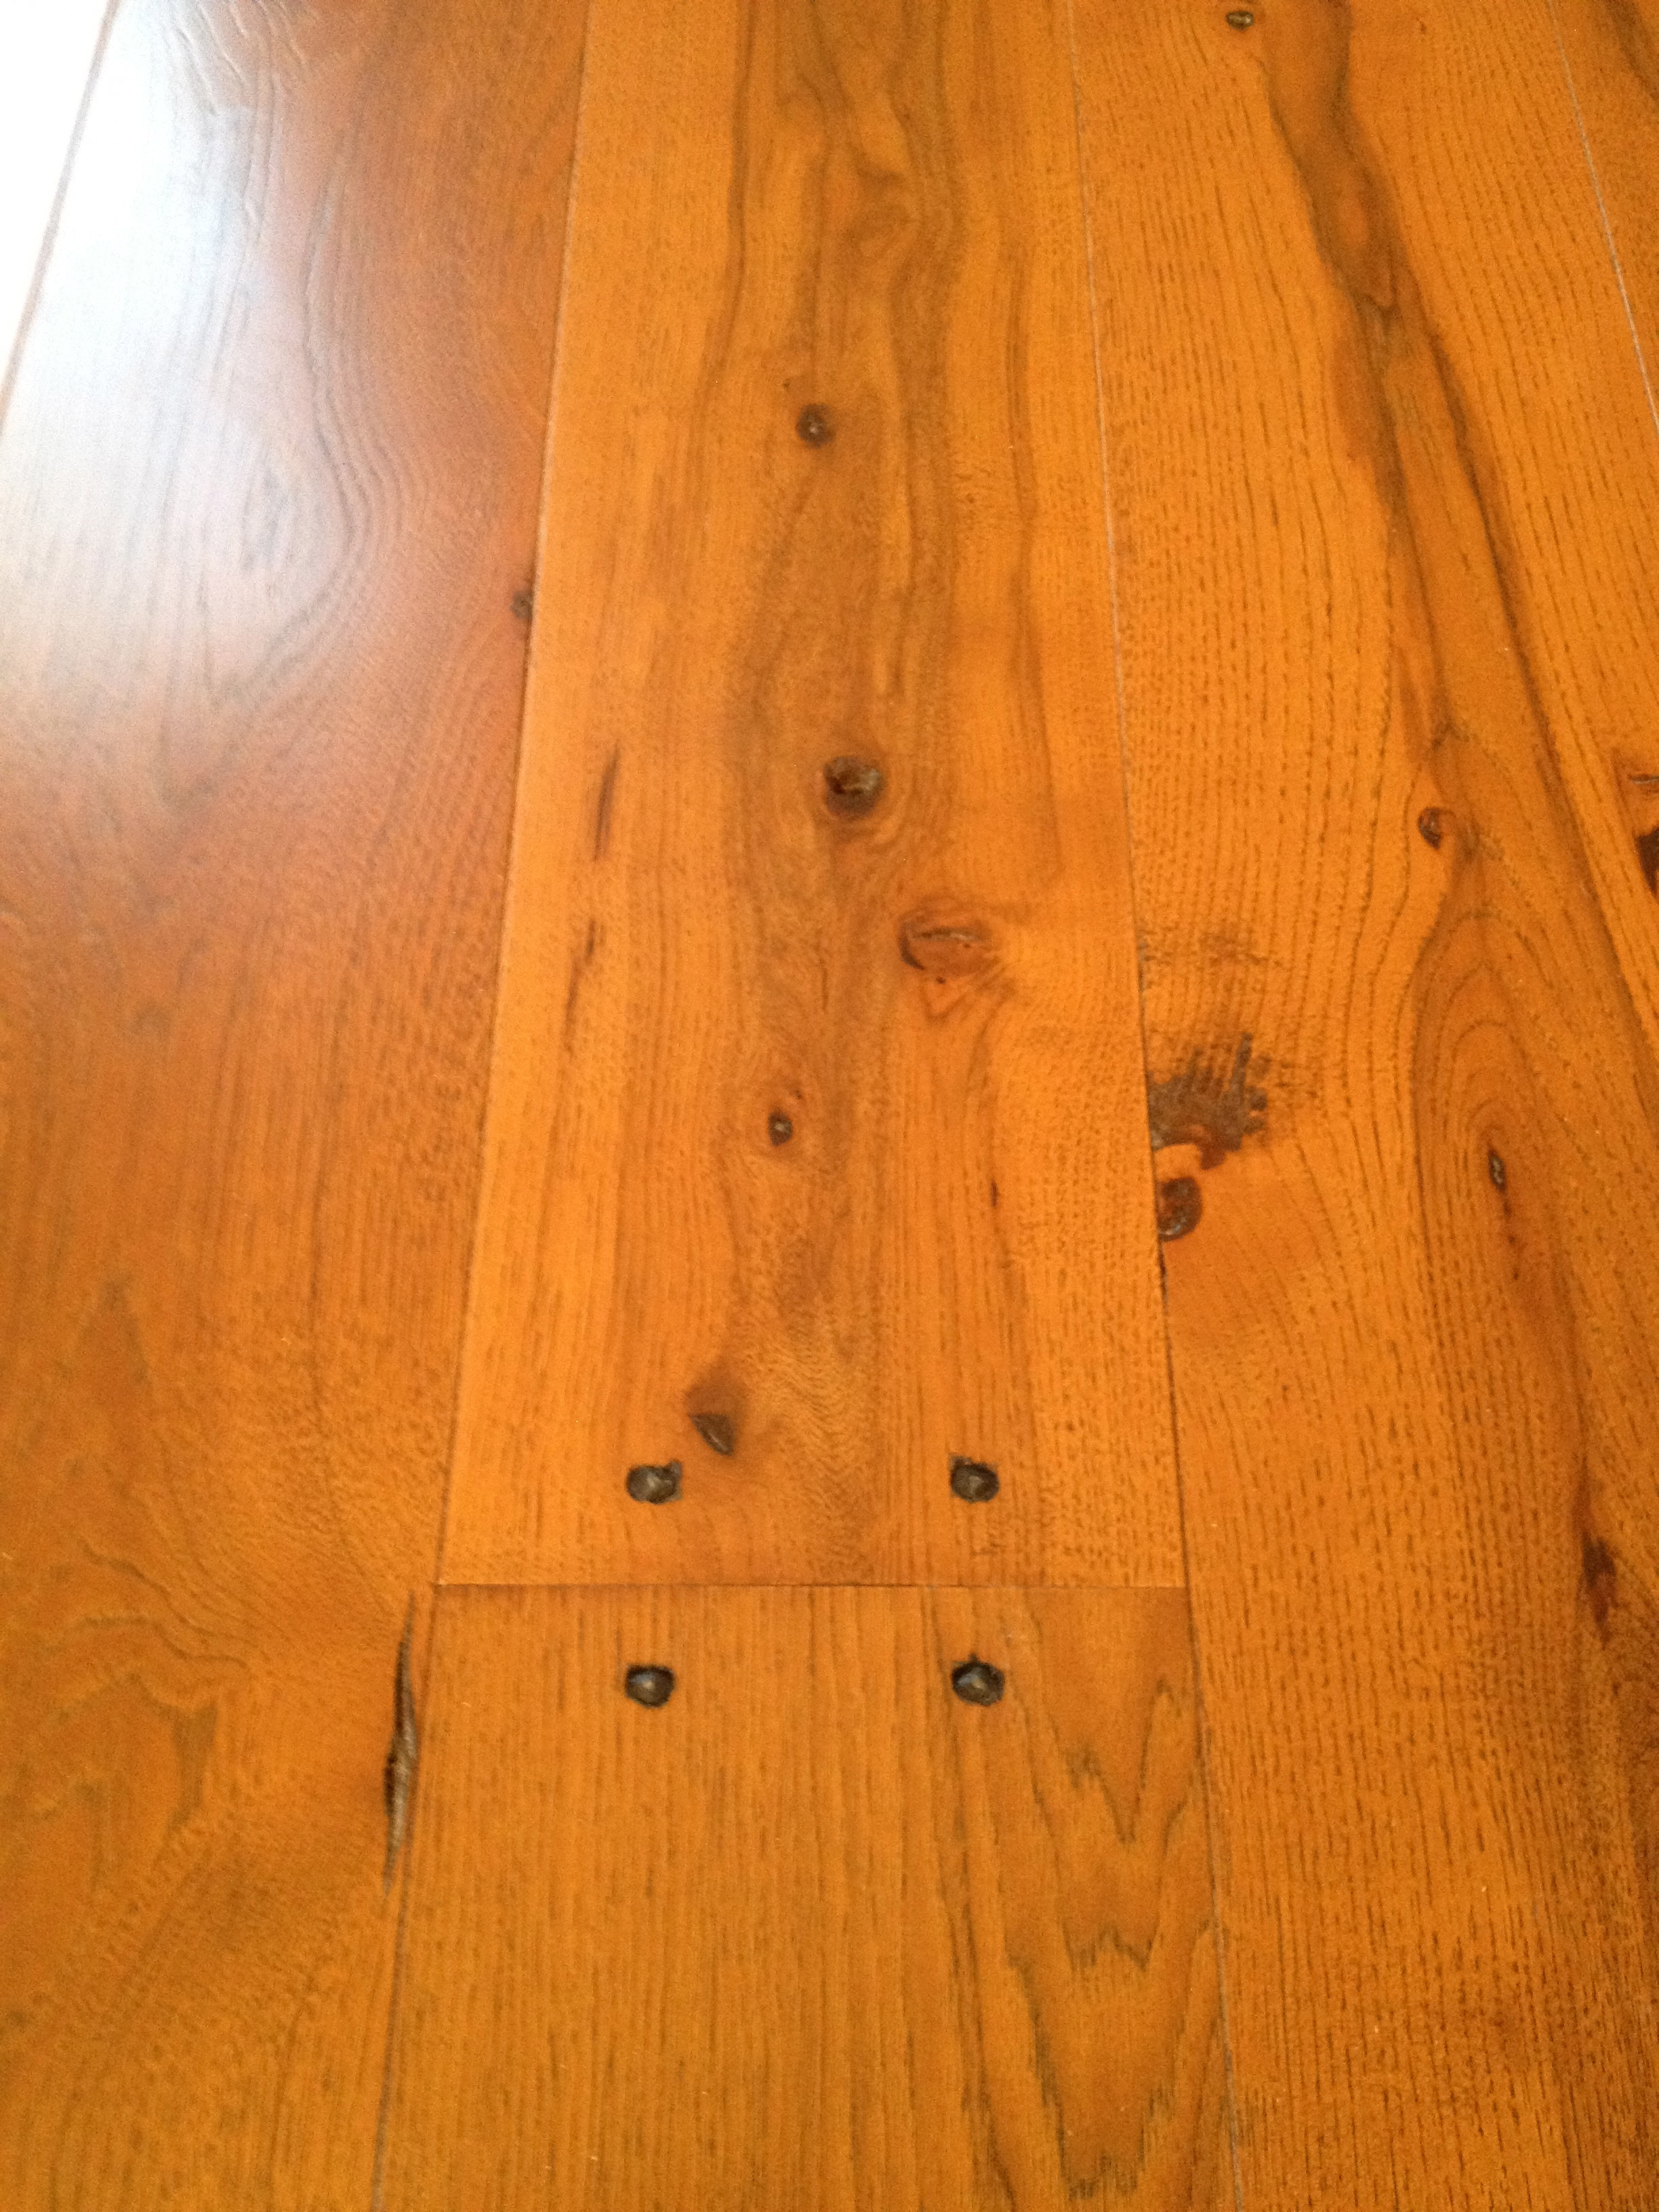 hardwood floor repair south jersey of flooring portfolio gorsegner brothers regarding img 0322